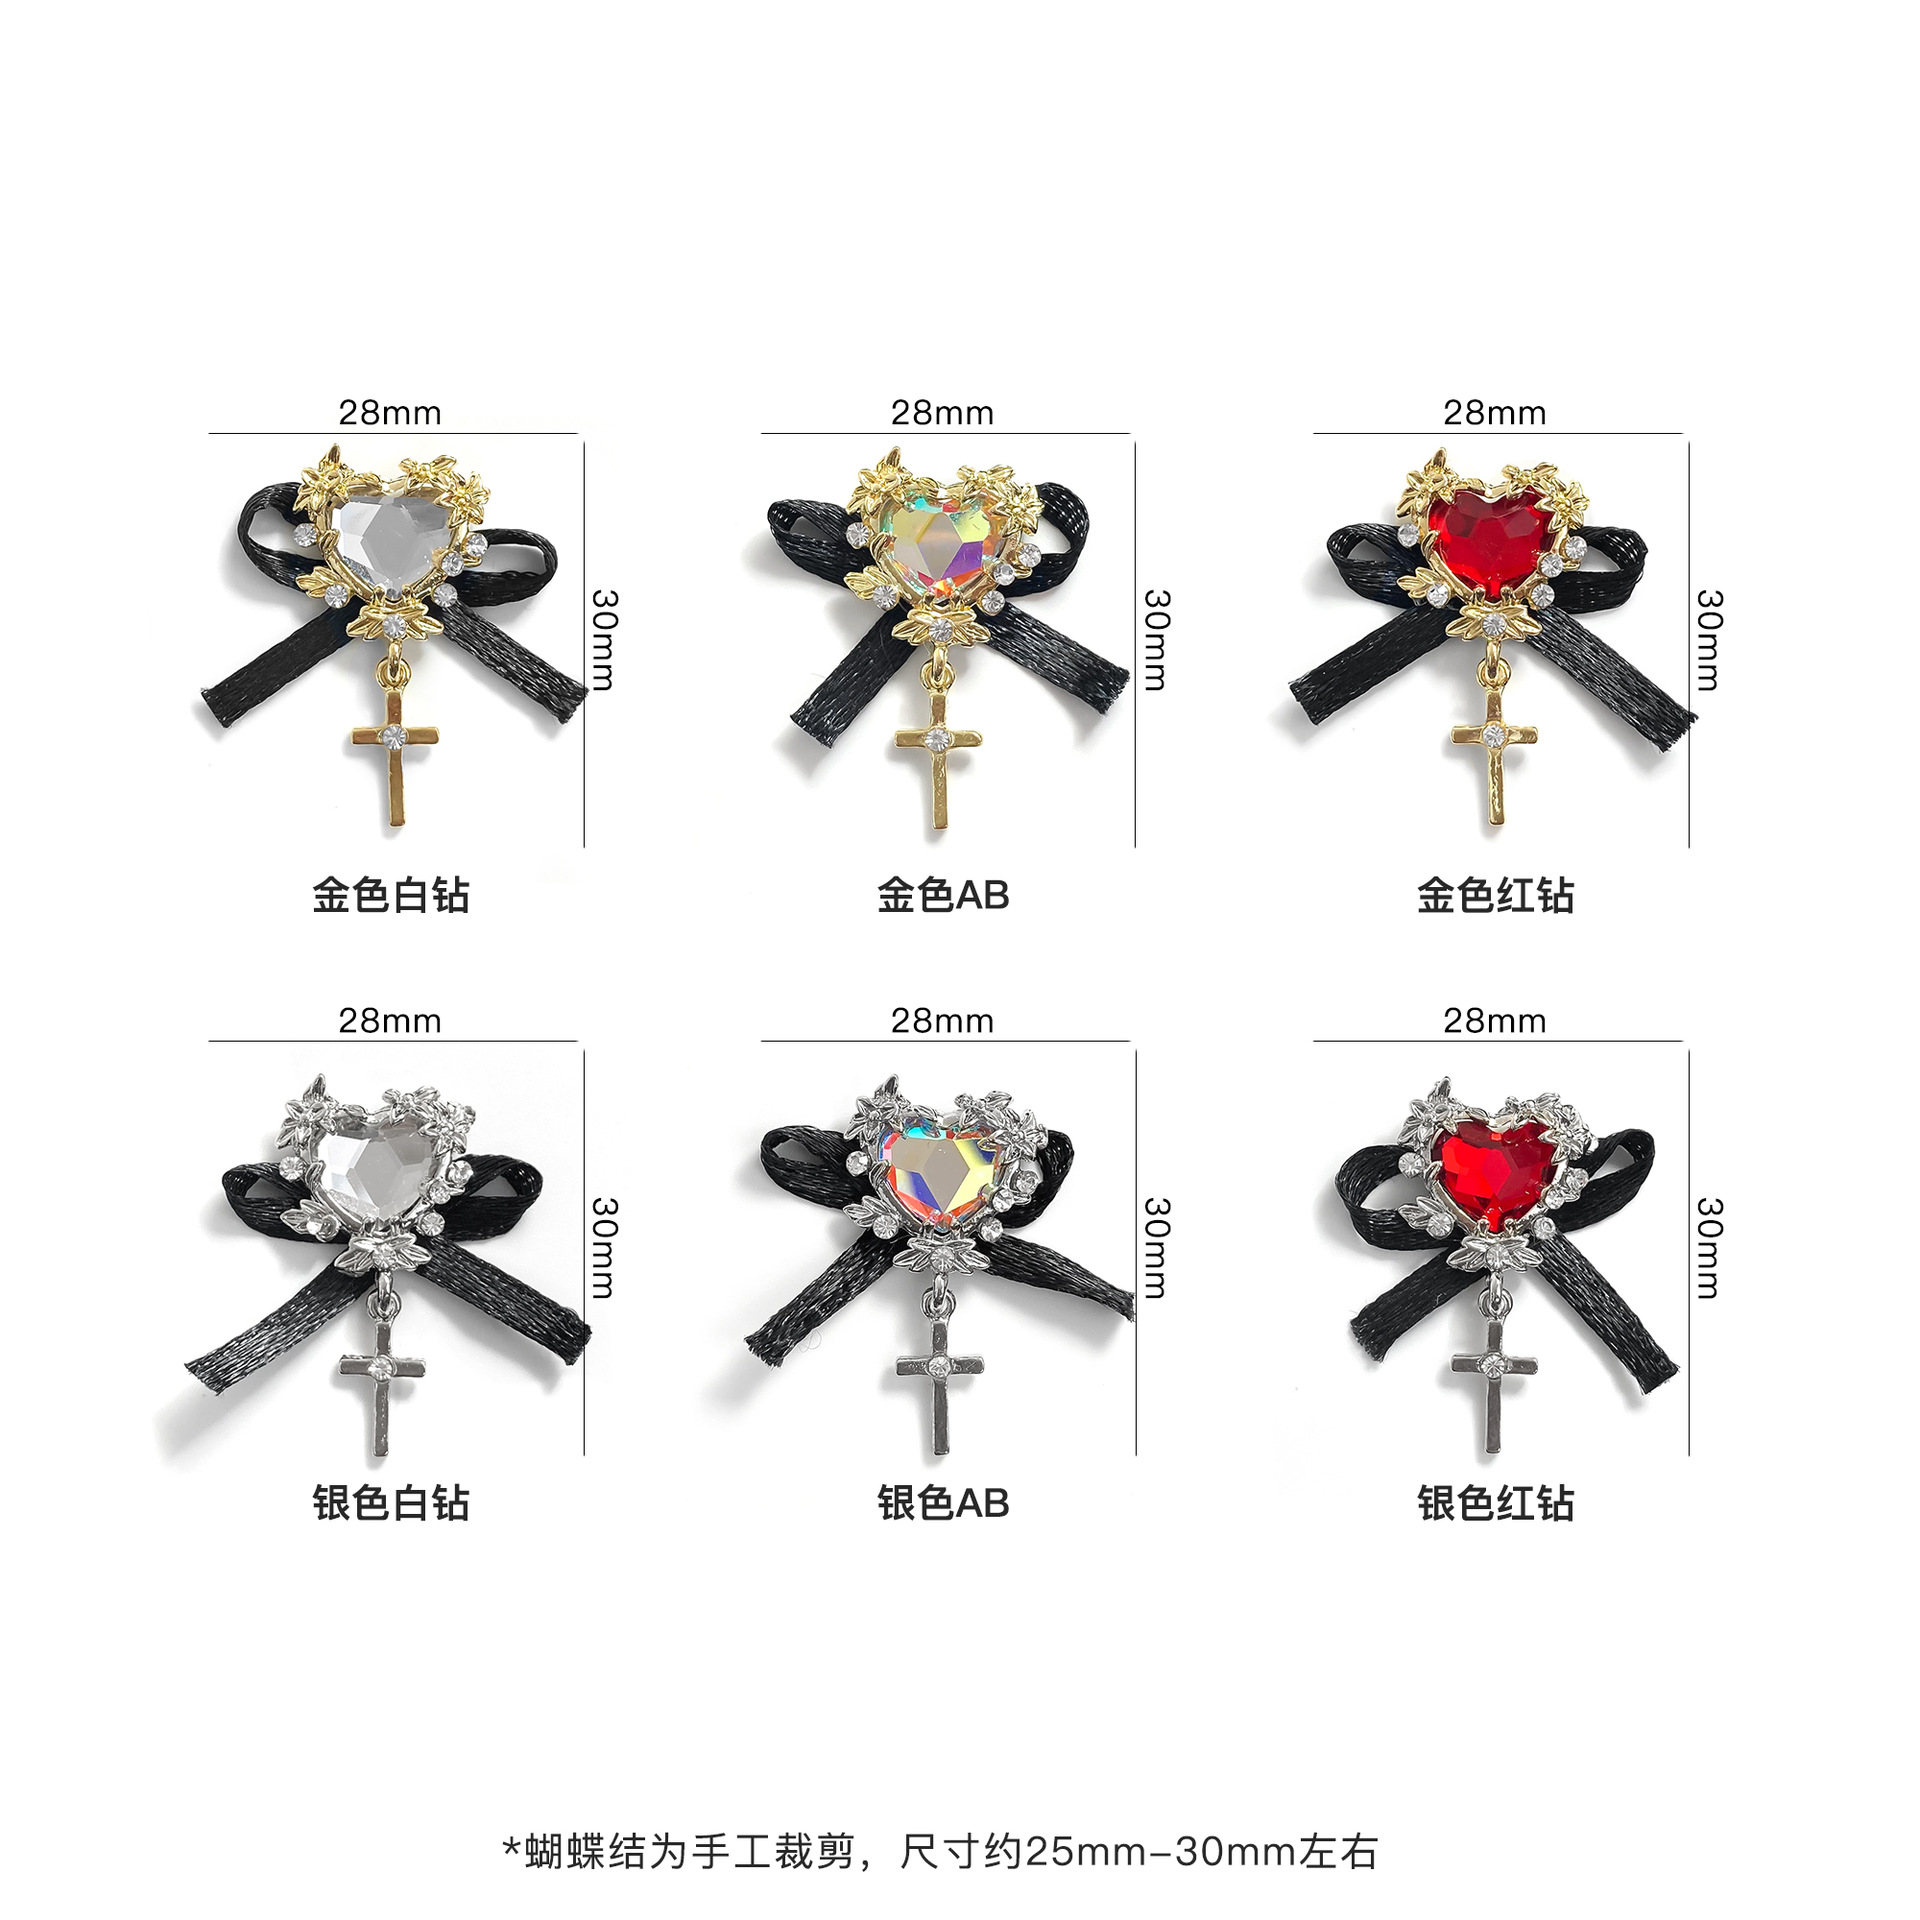 Nail Bow Love Cross Dark Series Retro Affordable Luxury Metal Rhinestone Fingernail Decoration